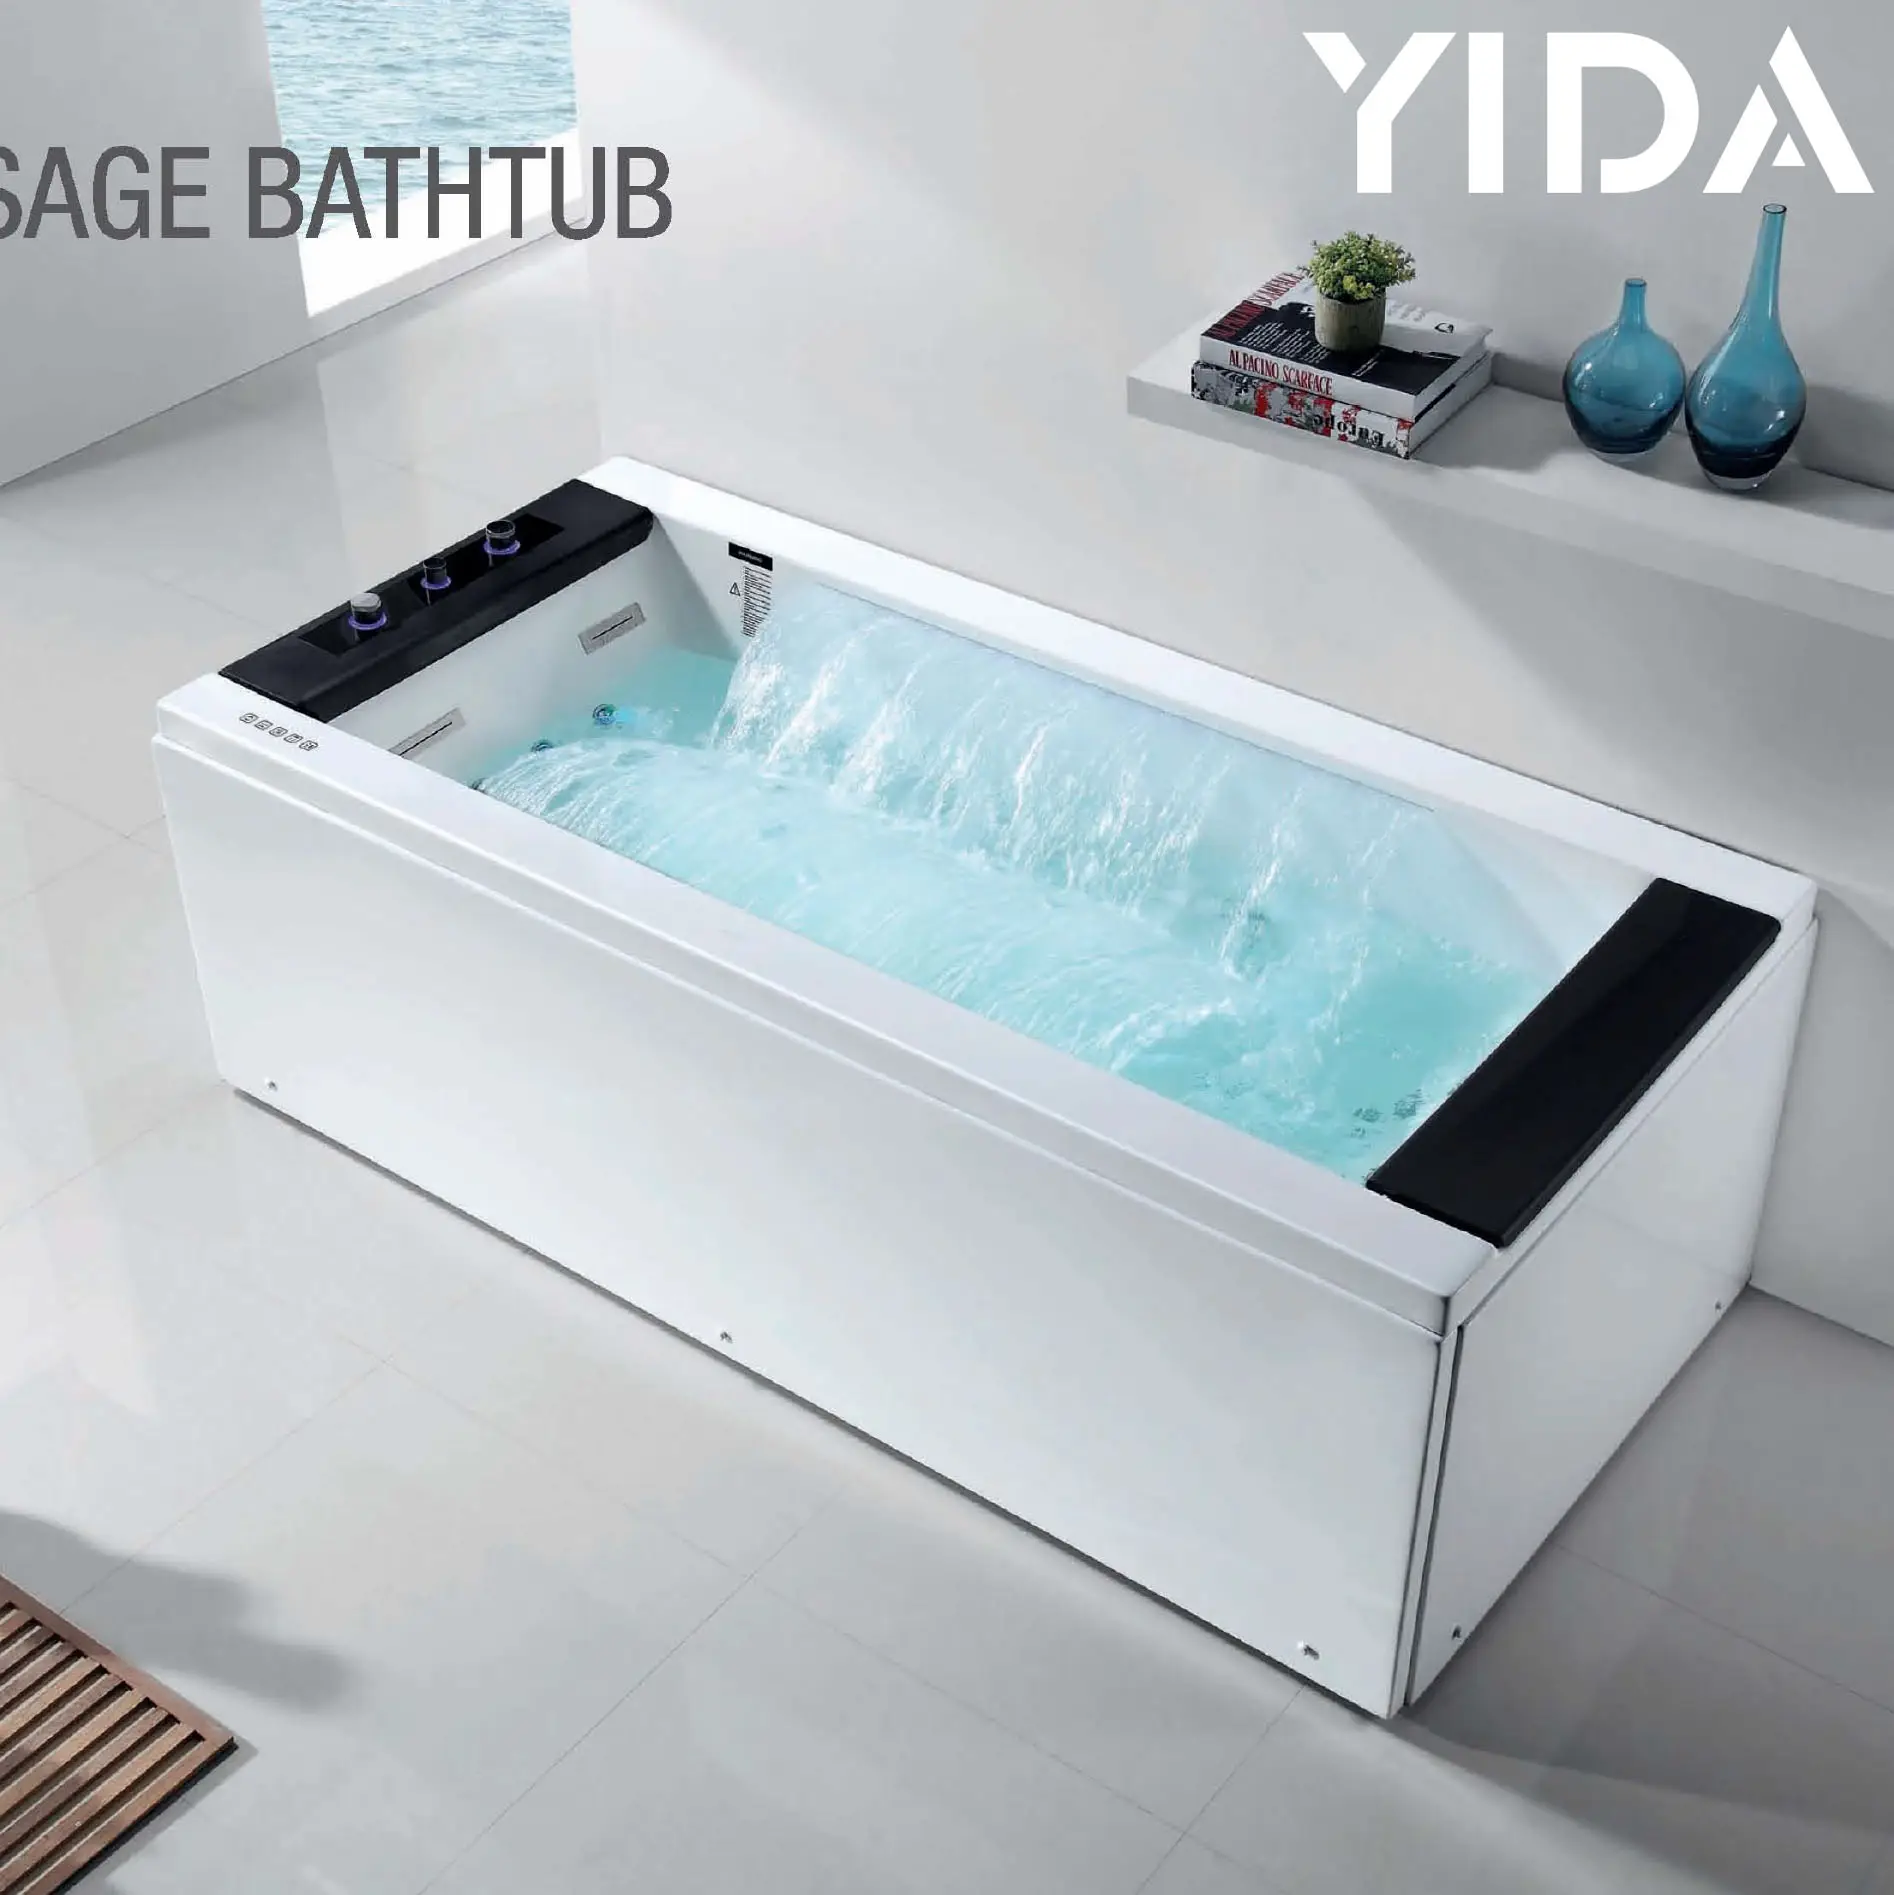 यूरोप गुणवत्ता मानक मालिश बाथटब एकल व्यक्ति भँवर झरना बाथटब के साथ तकिया